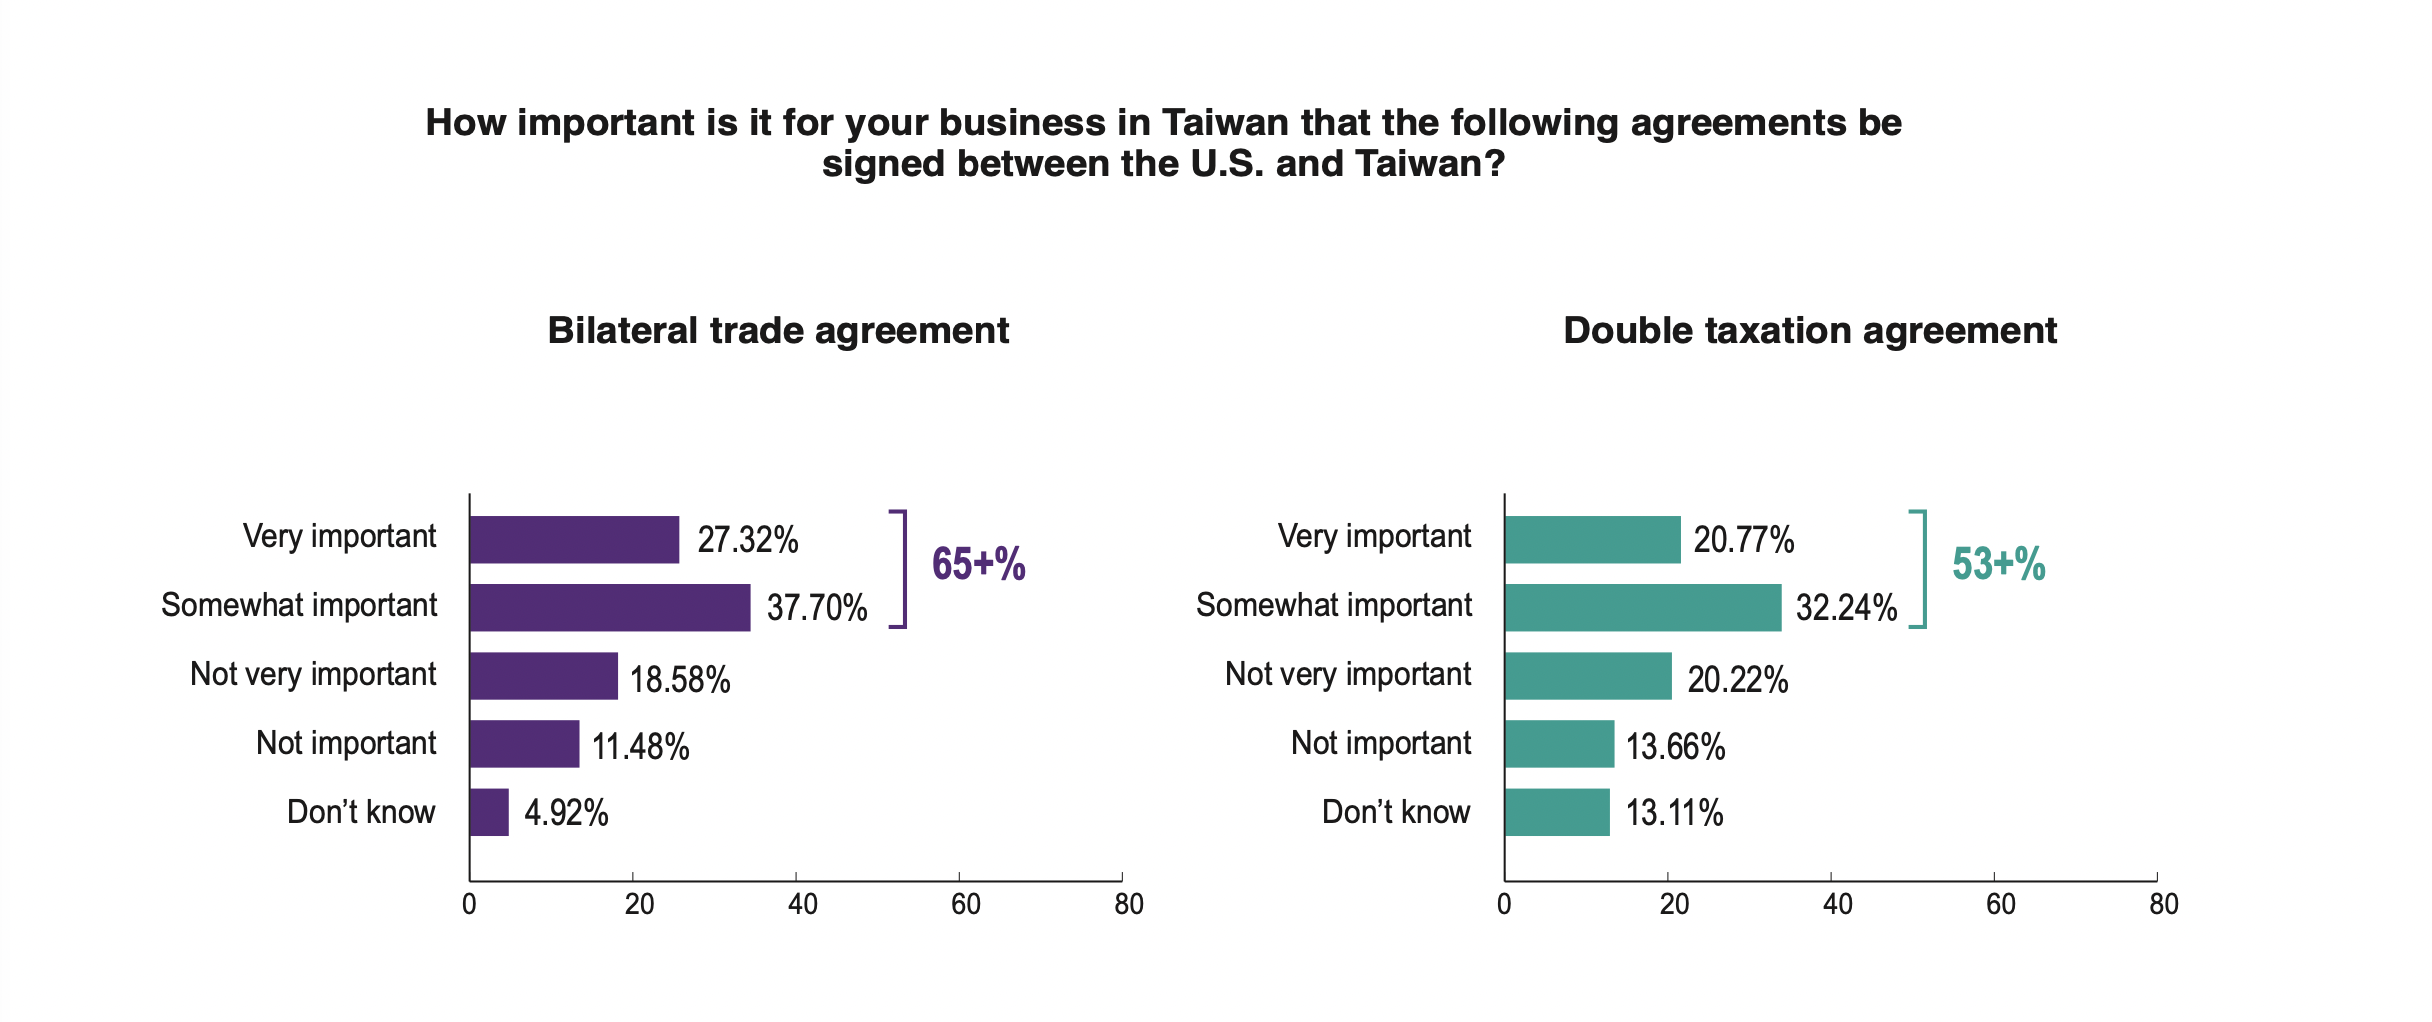 U.S. company support for a U.S.-Taiwan BTA